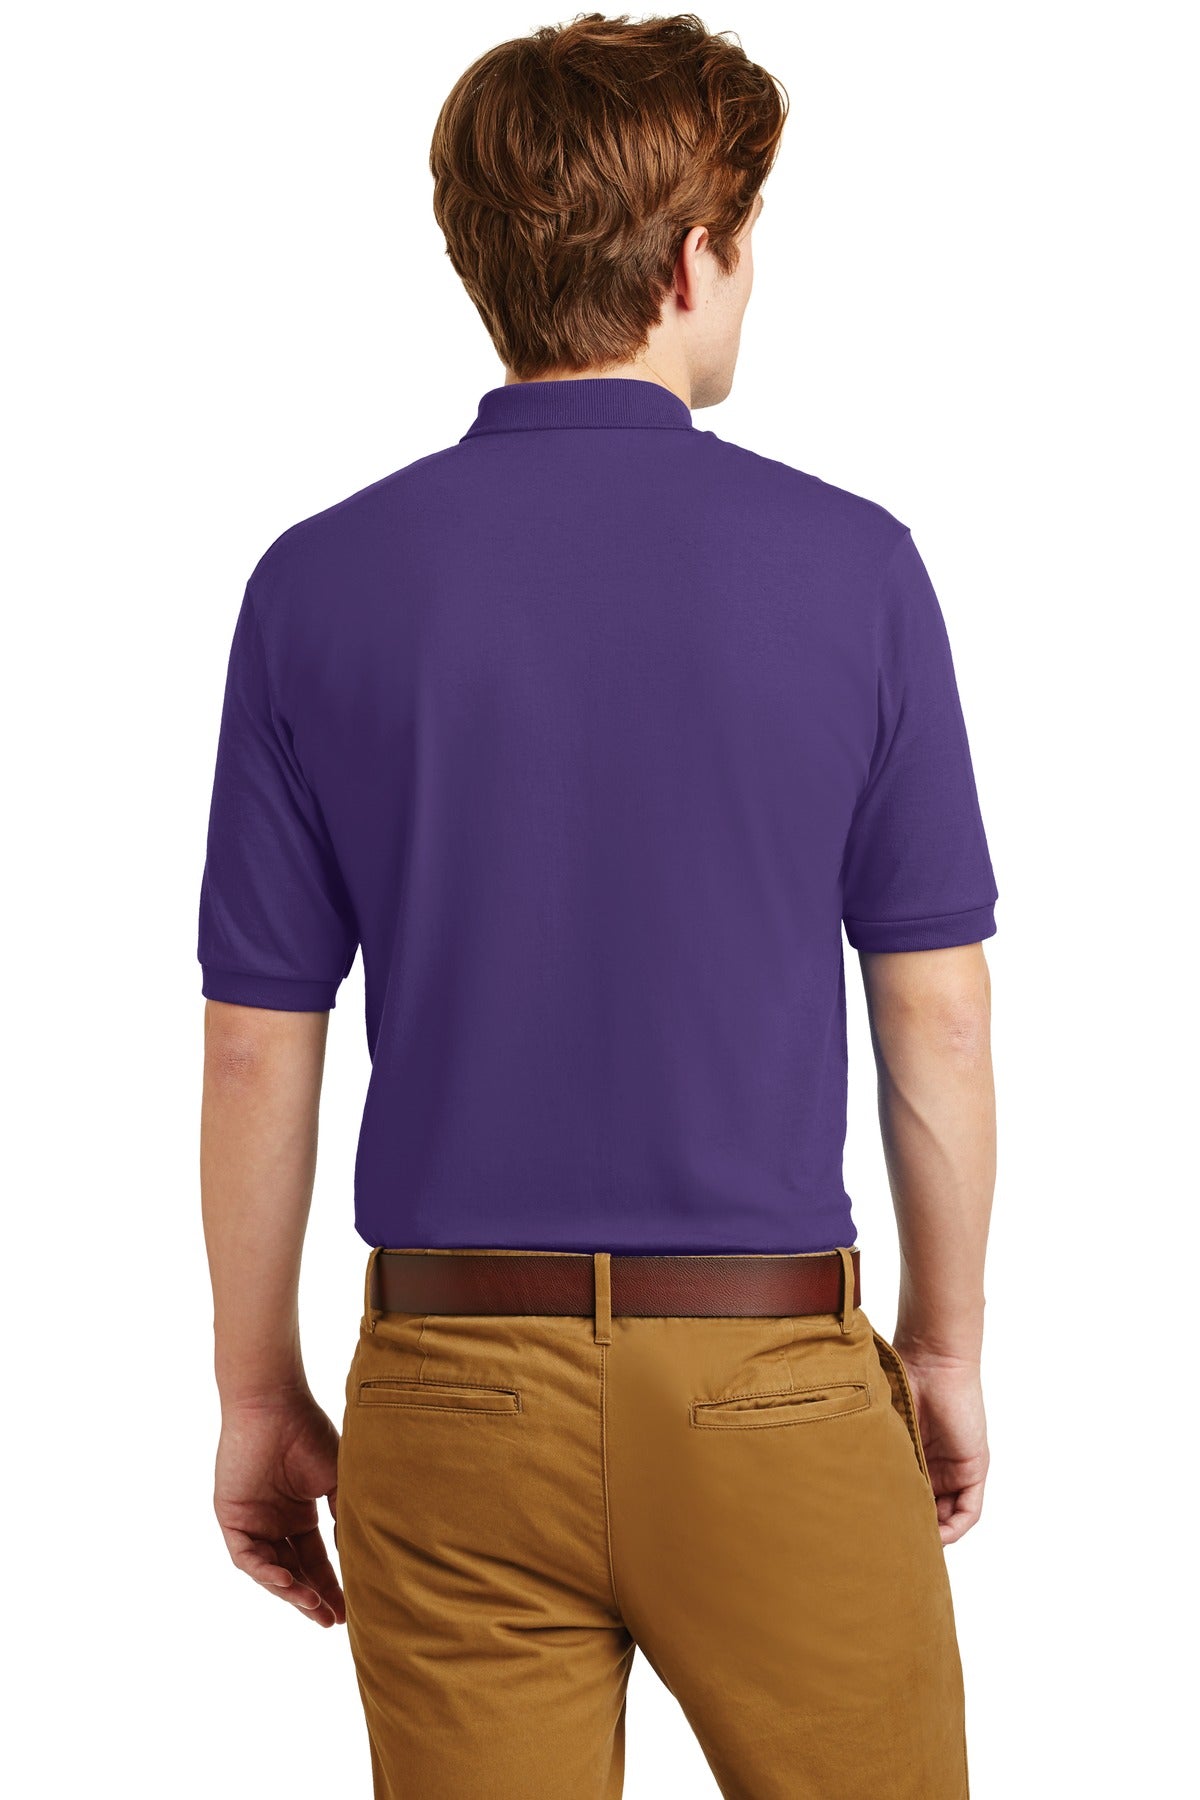 JERZEES® - SpotShield™ 5.4-Ounce Jersey Knit Sport Shirt. 437M [Deep Purple] - DFW Impression